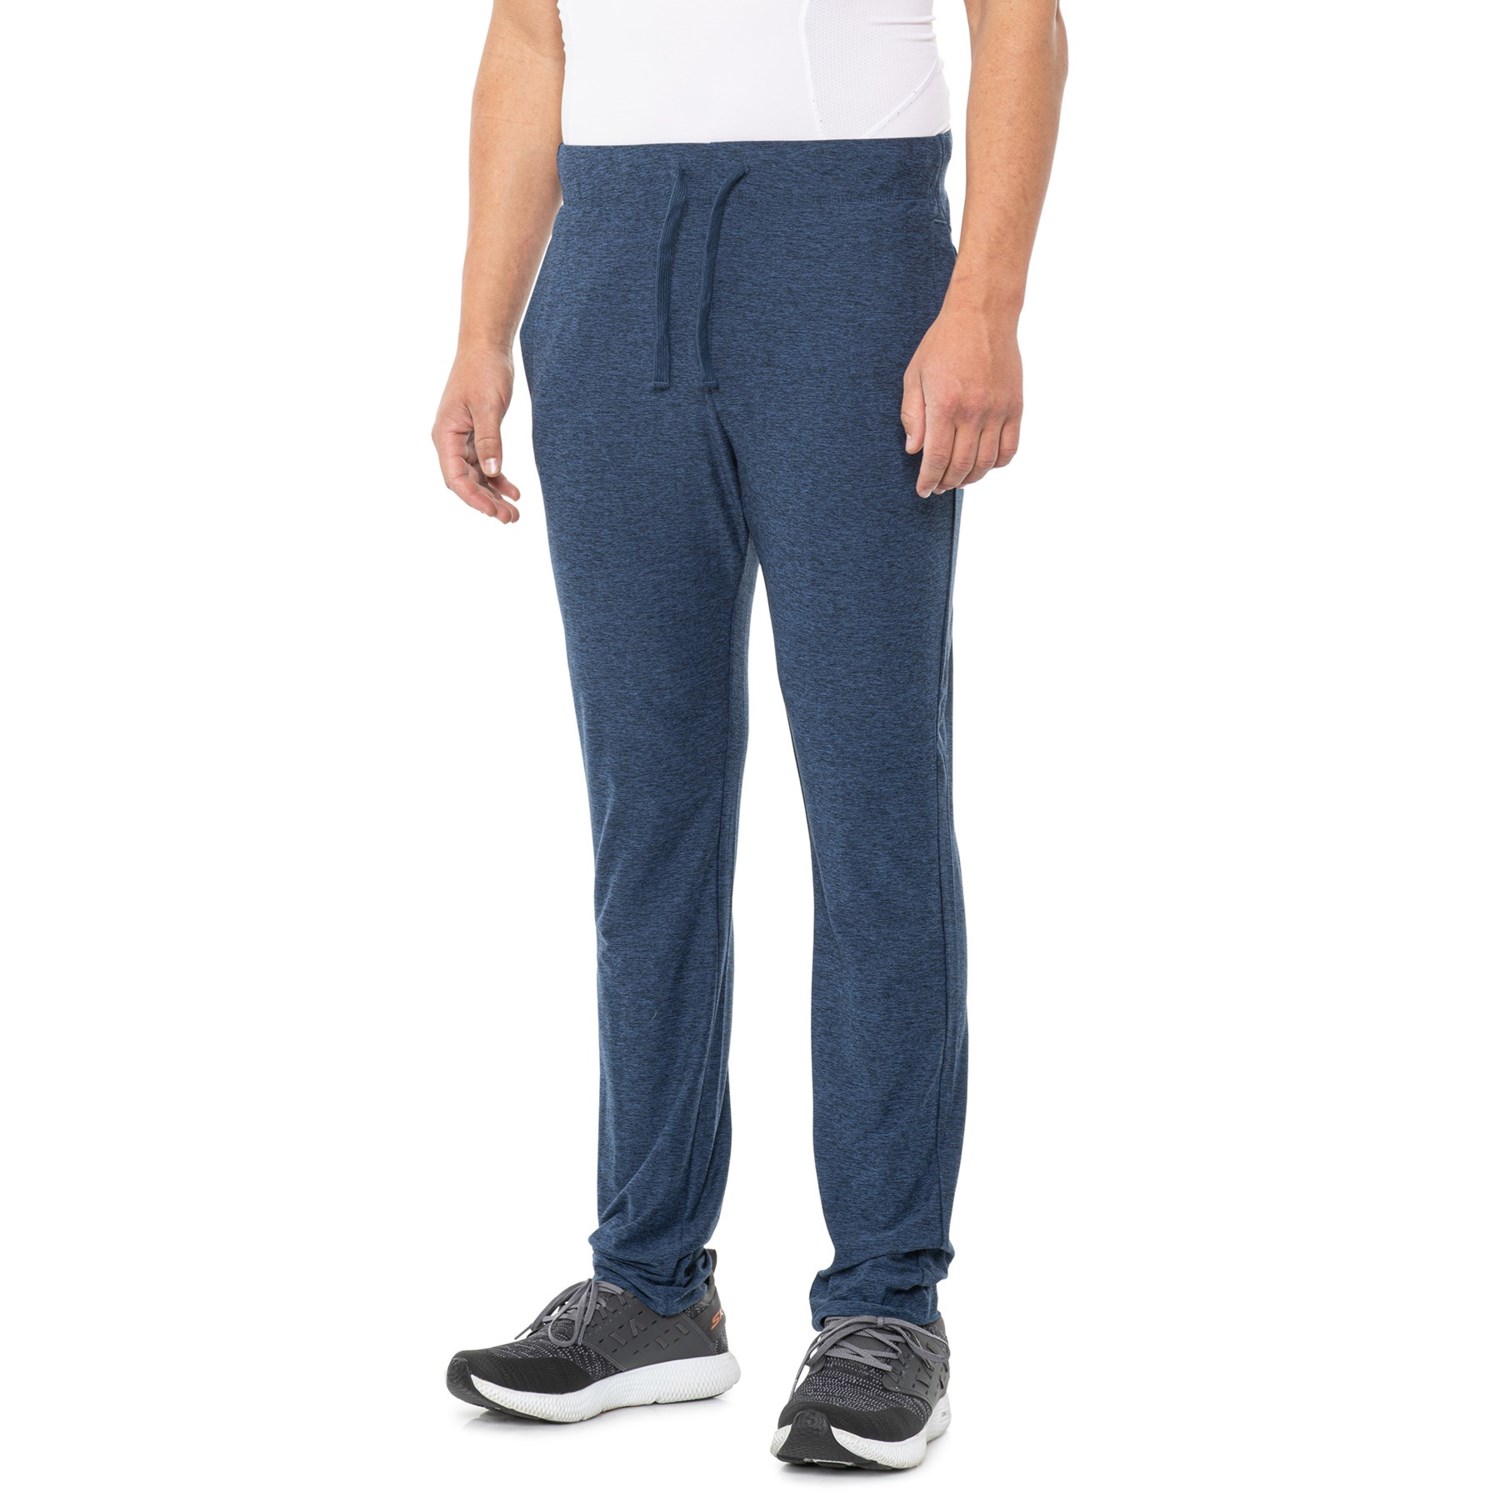 Kyodan Moss Jersey Pants (For Men) - Save 29%